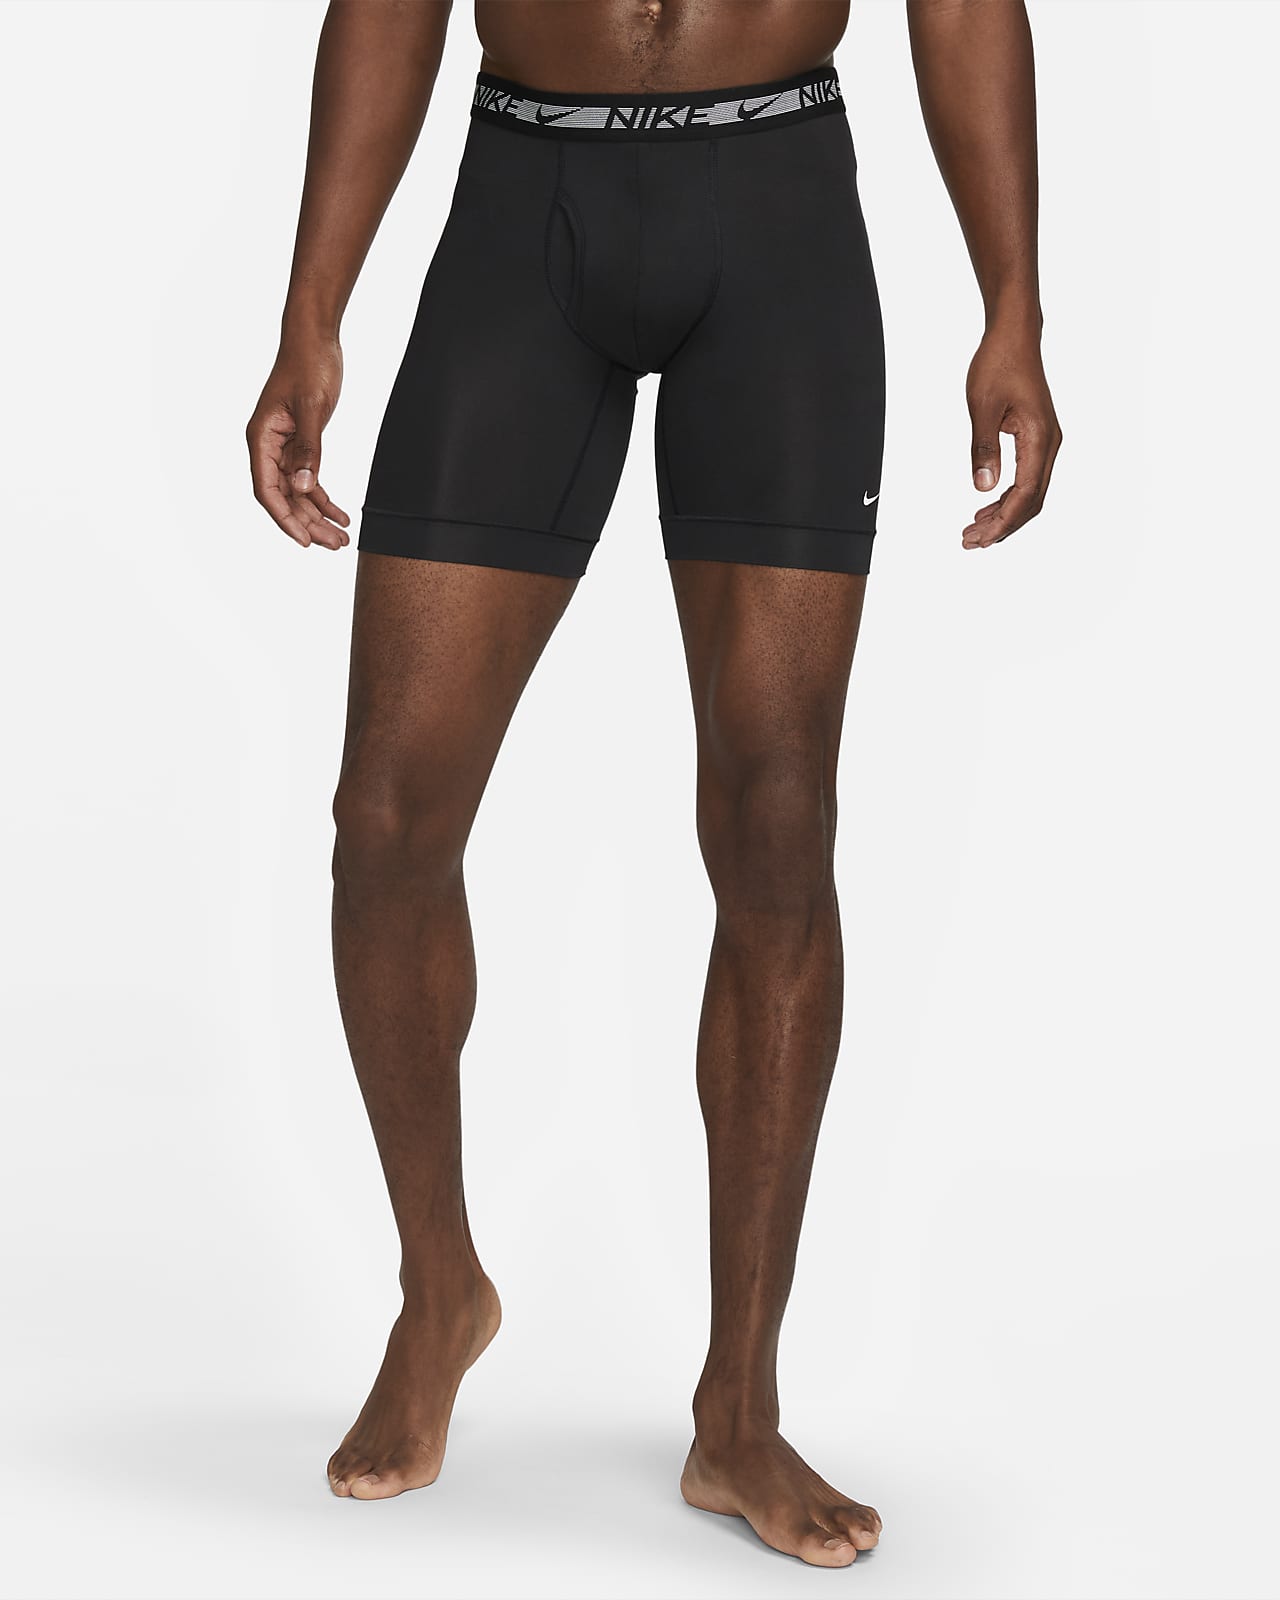 NIKE 3 PACK Men's S Flex Micro Dri-Fit Boxer Briefs Black Underwear NEW